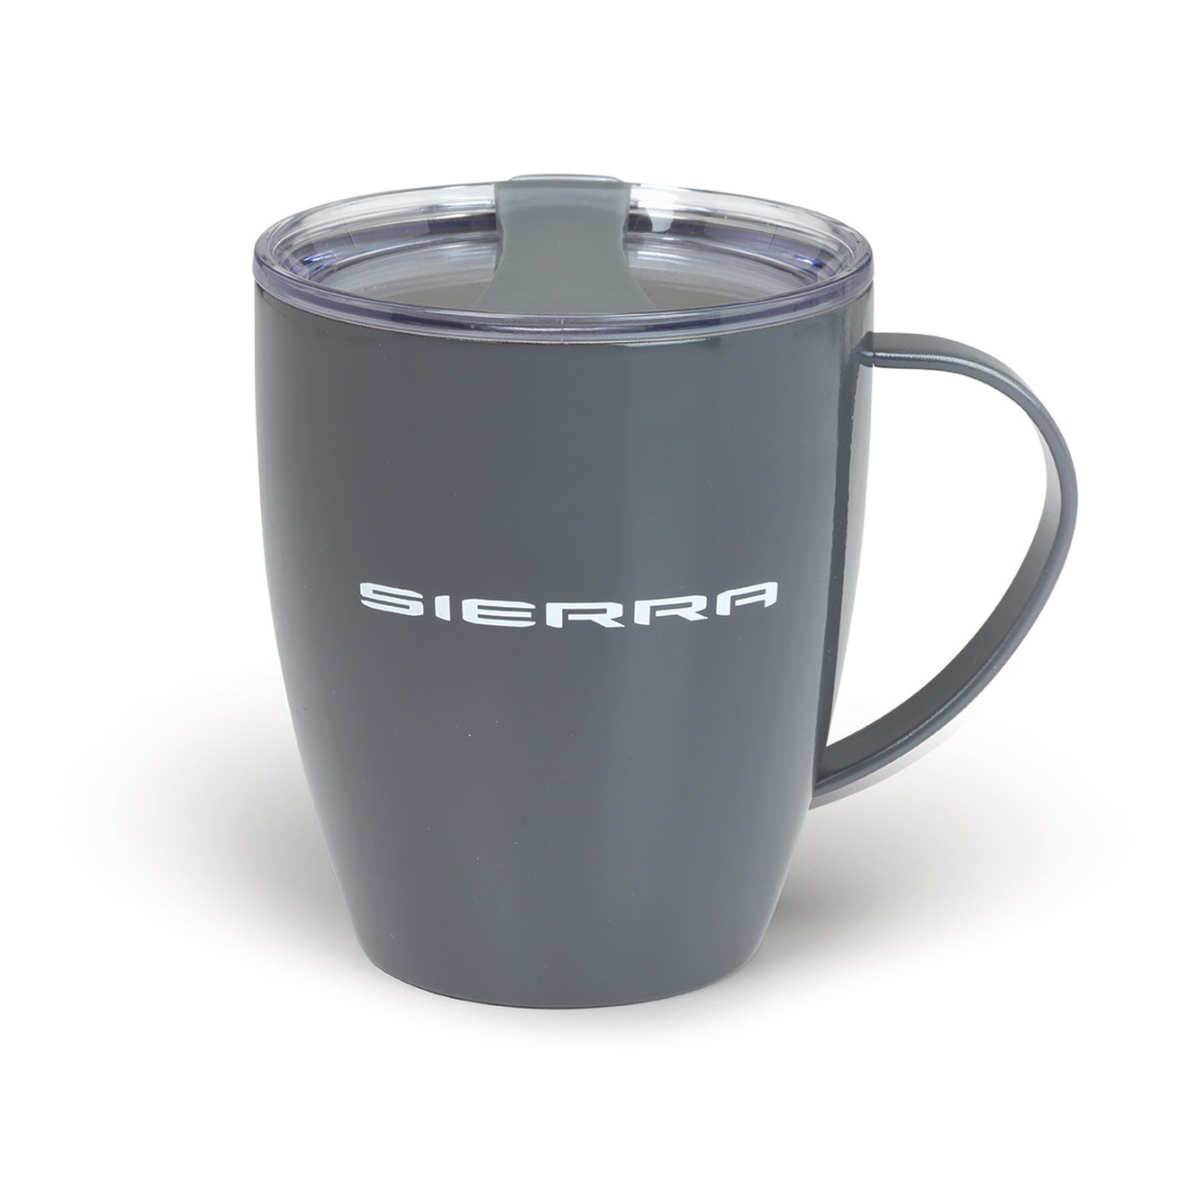 GMC Sierra Thermal Mug